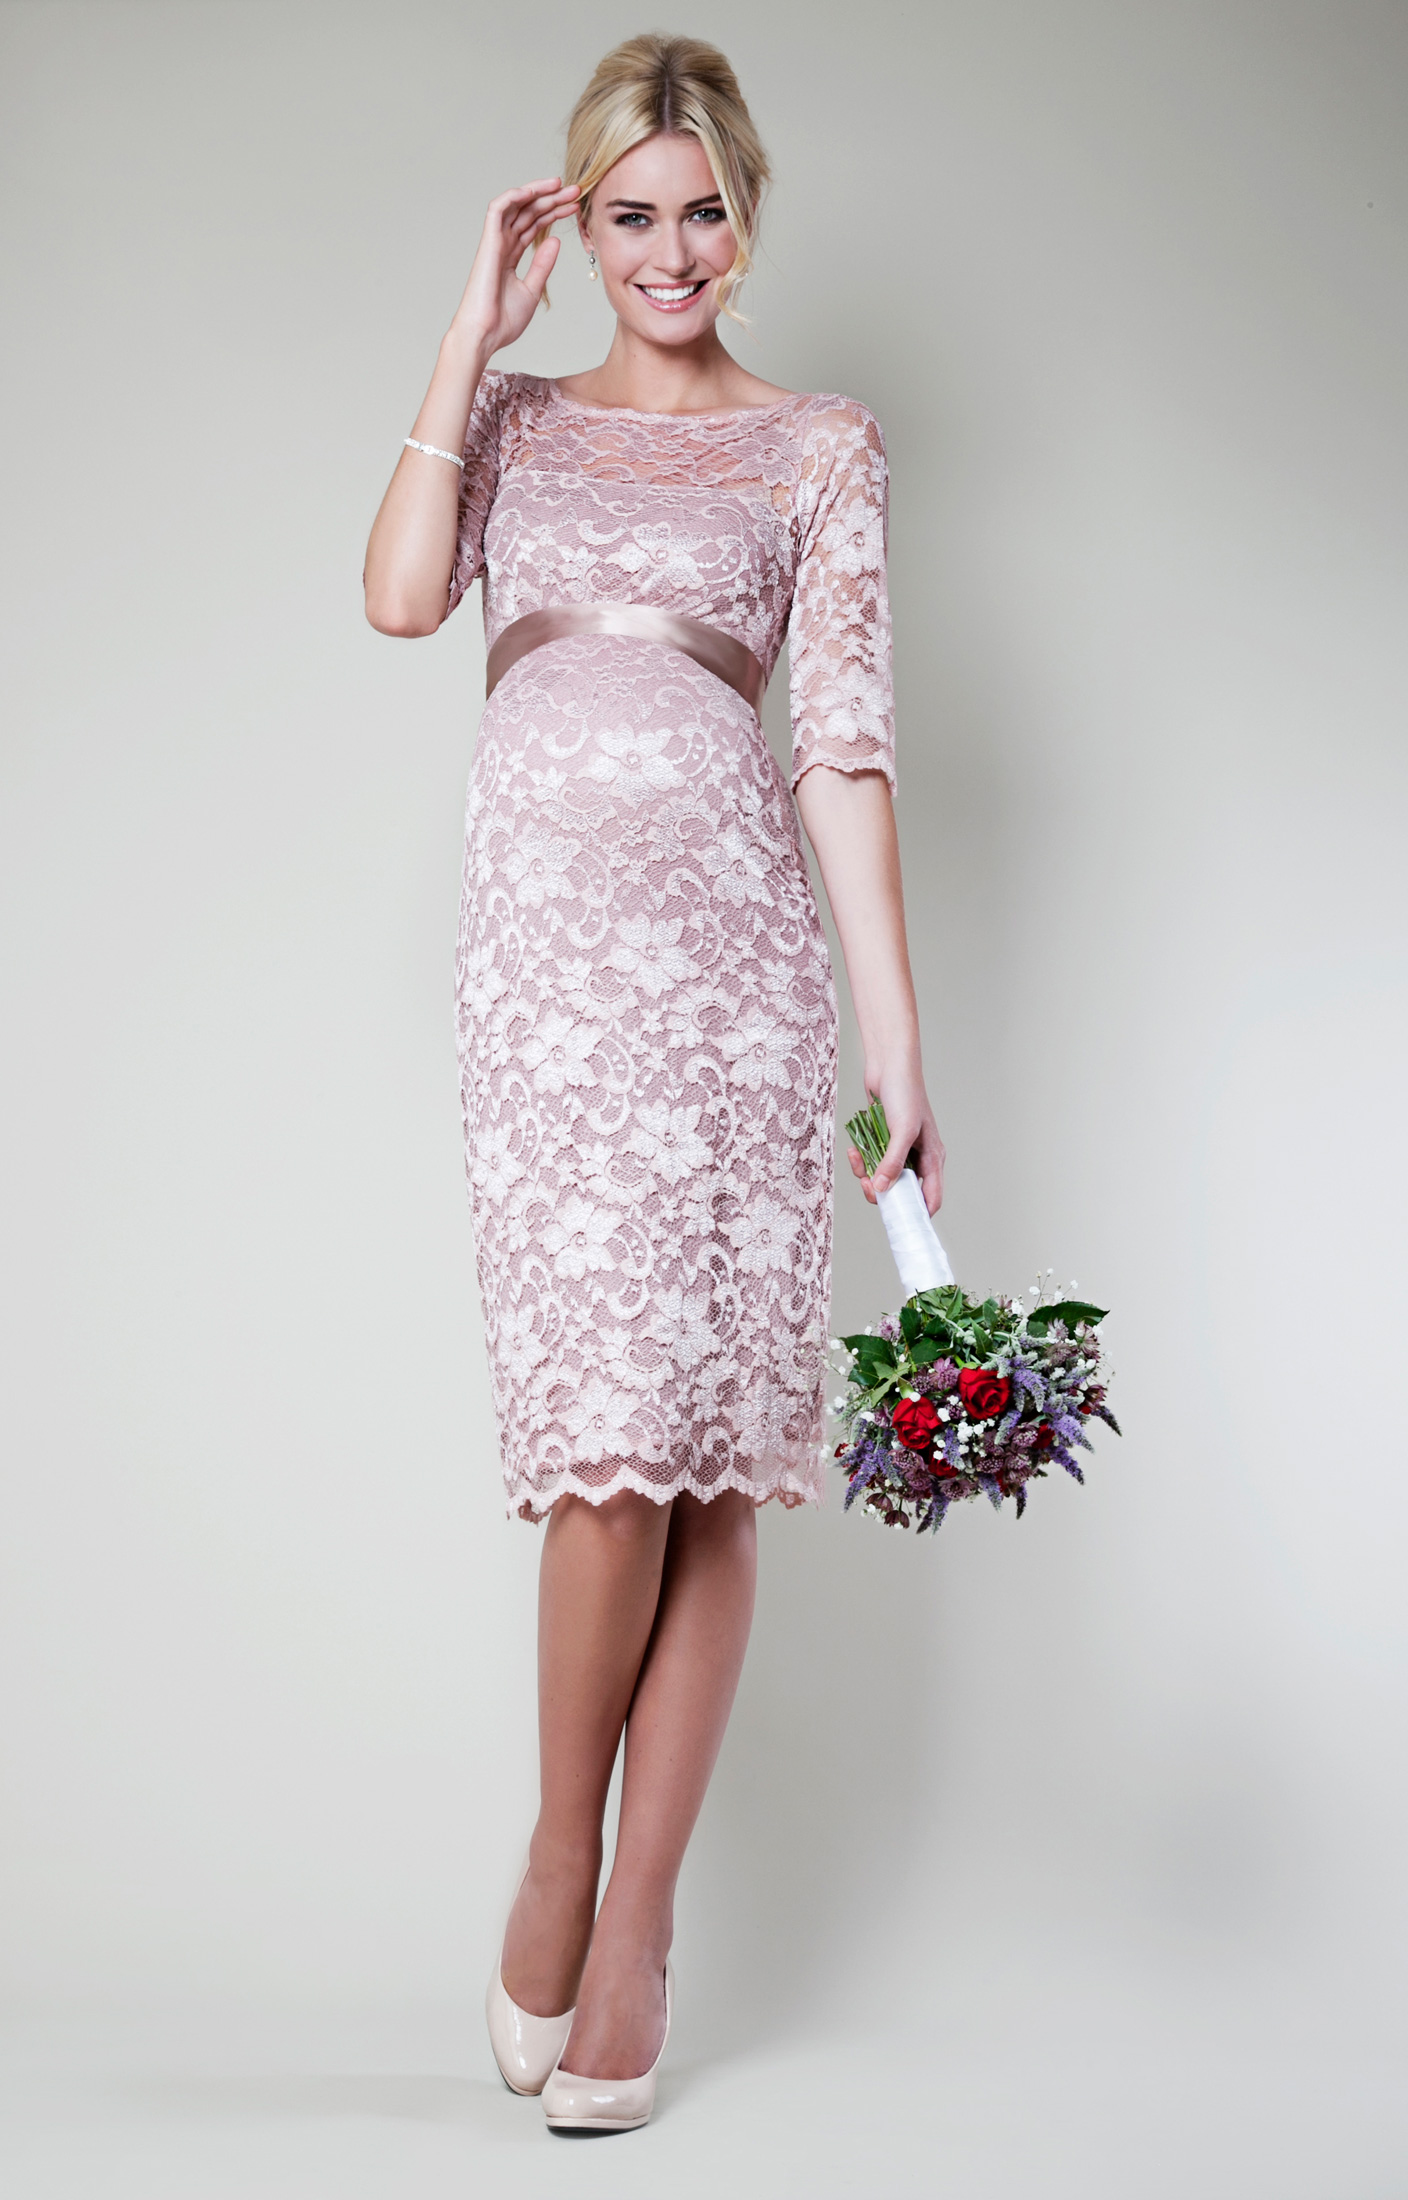 Tiffany Rose Amelia Maternity Lace Dress in Caviar Black - 0 (US 0-2)